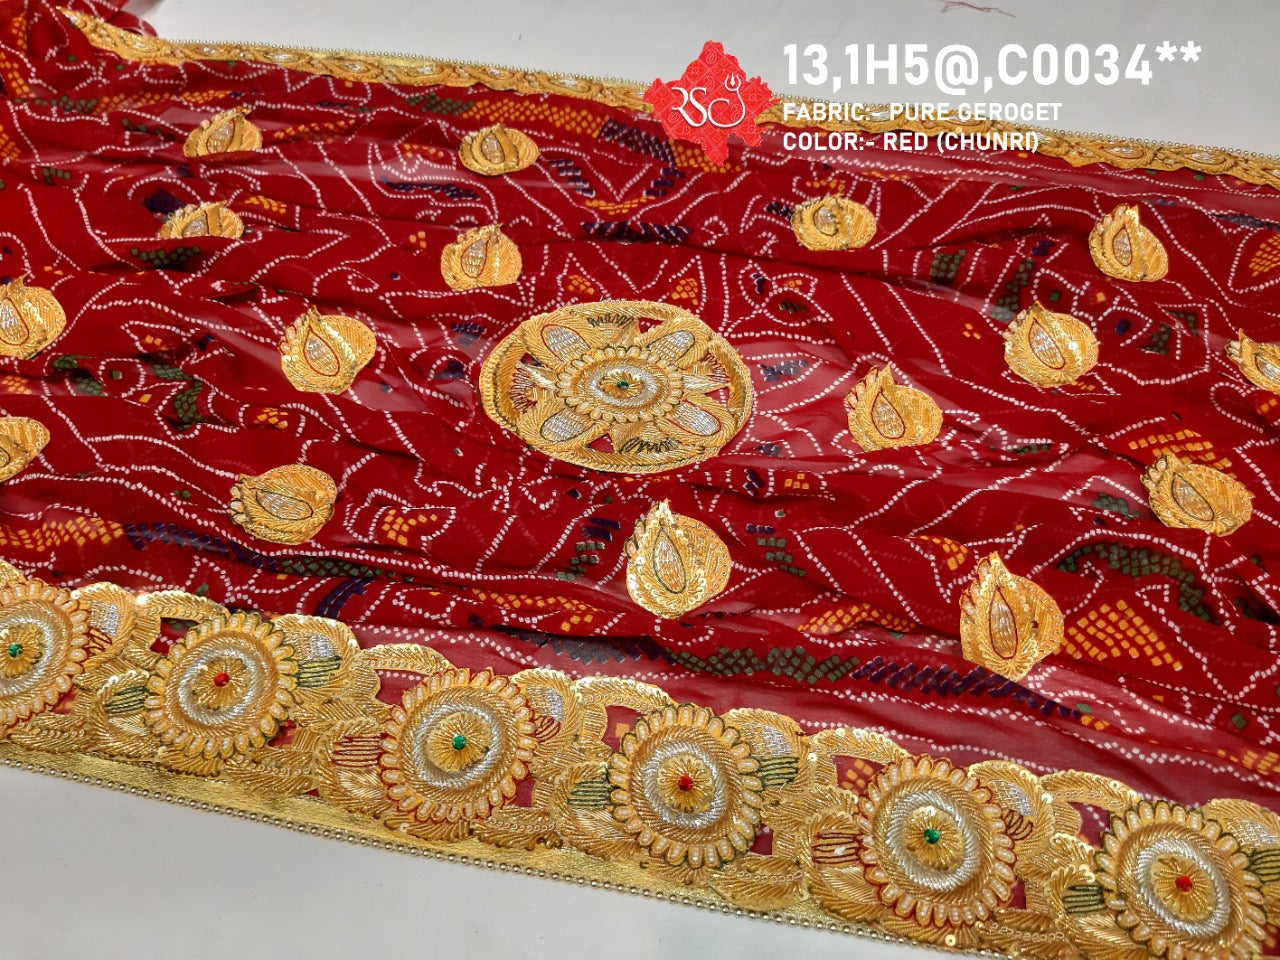 Jaipuri Special Rajasthani Chundi Odhana Full Size Or Kc Chunri (Pure Georgette Fabric) Pila